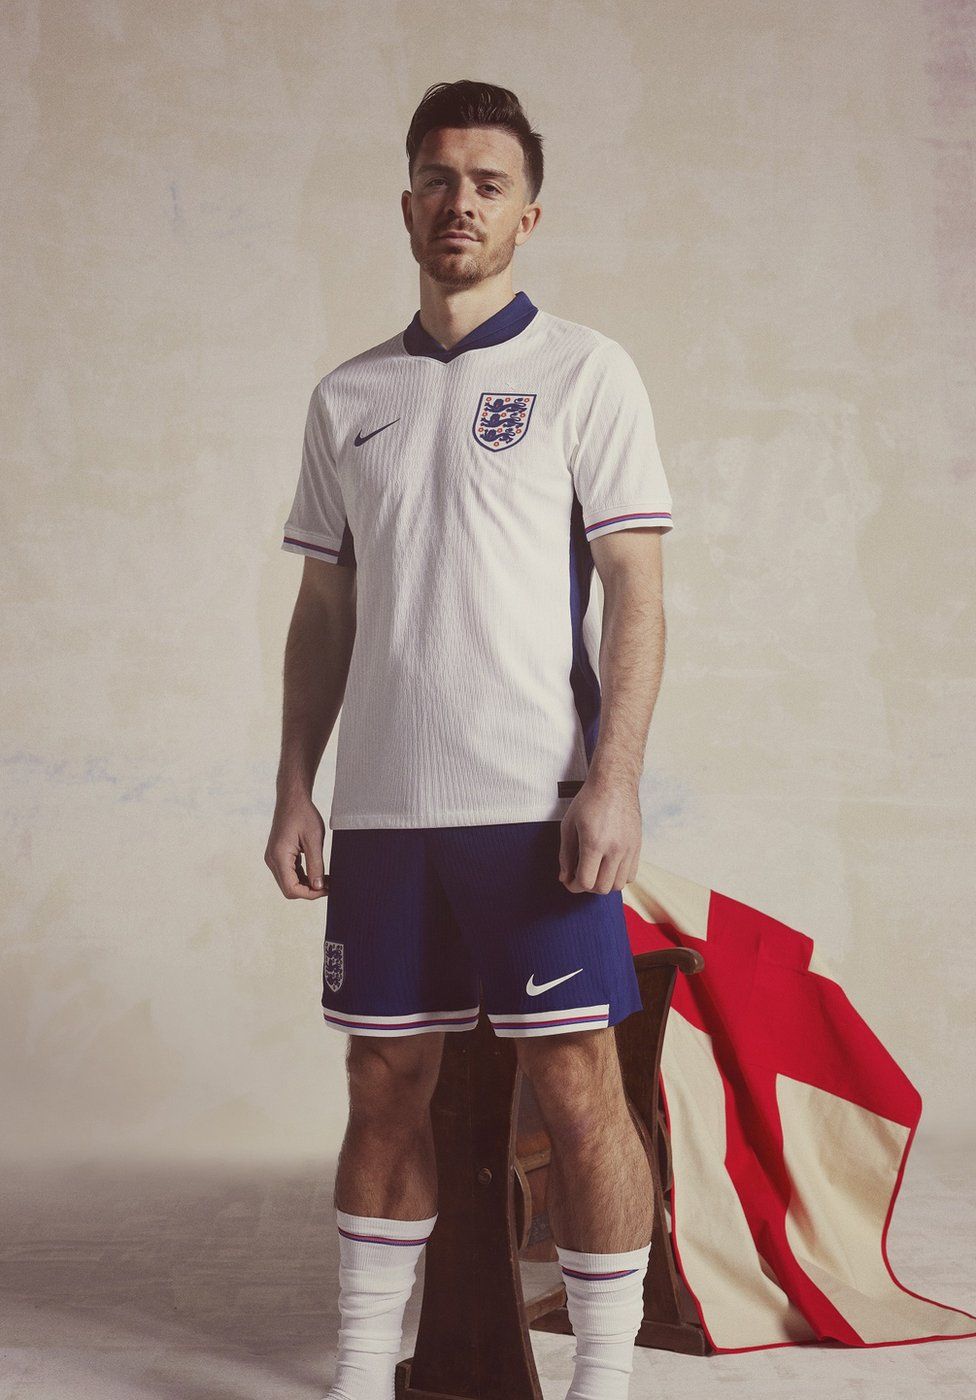 Jack Grealish wearing the new England home kit